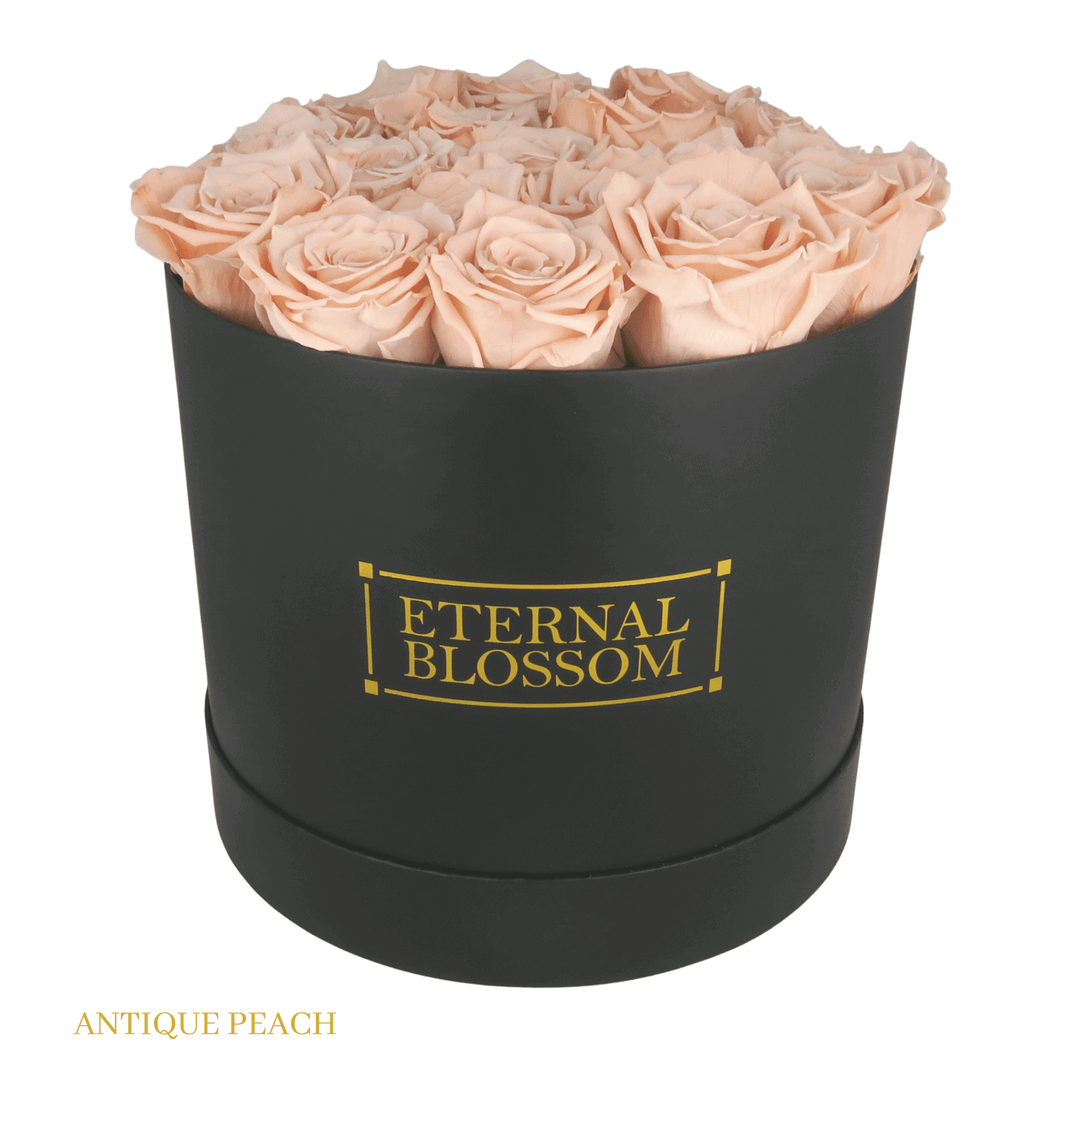 Large Round Blossom Box - Black Box - Year Lasting Rose Arrangement - Eternal Blossom